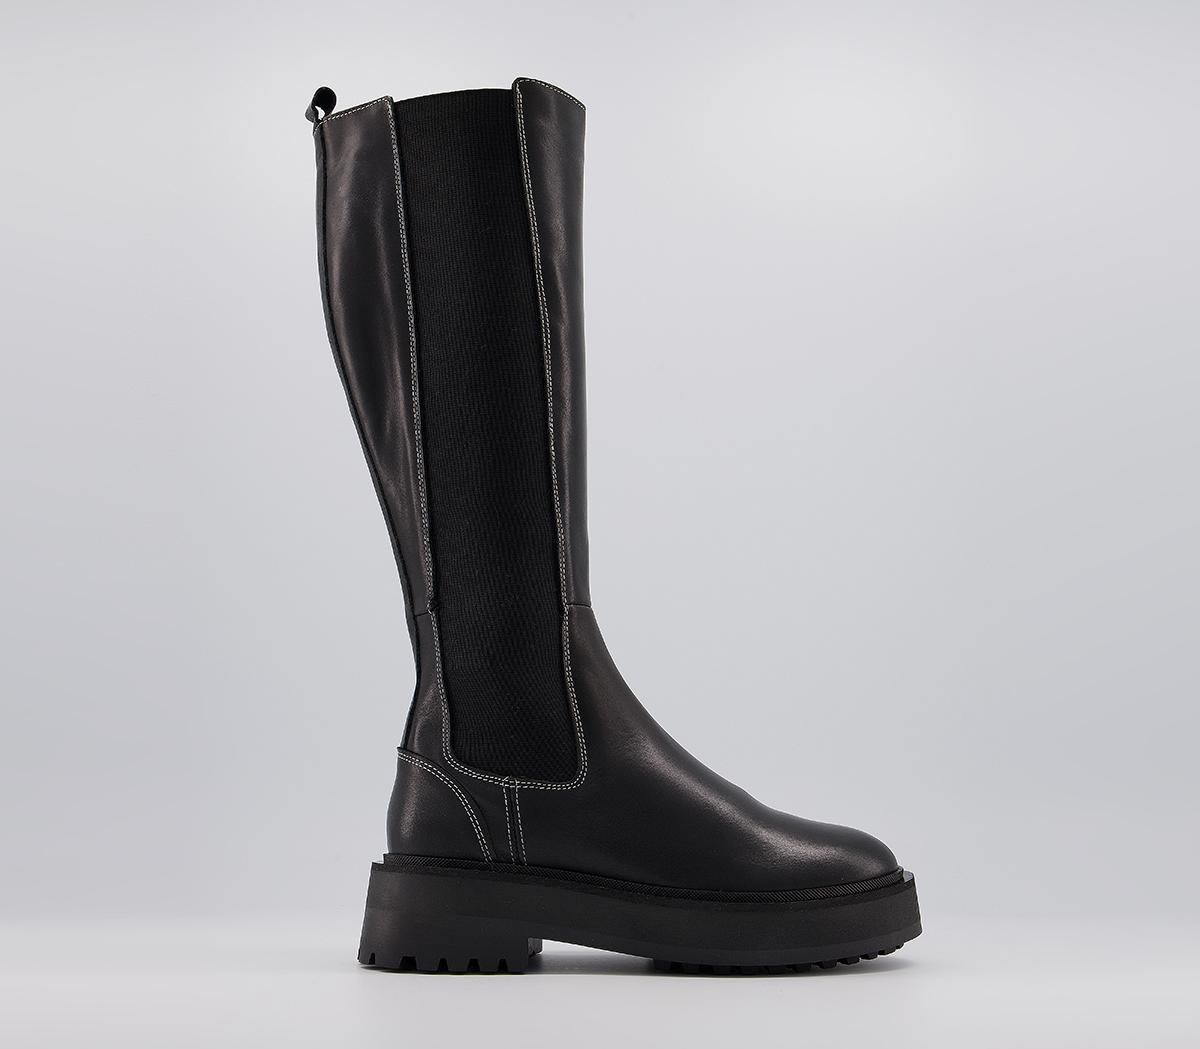 OFFICEKinley Feature Elastic Knee BootsBlack Leather